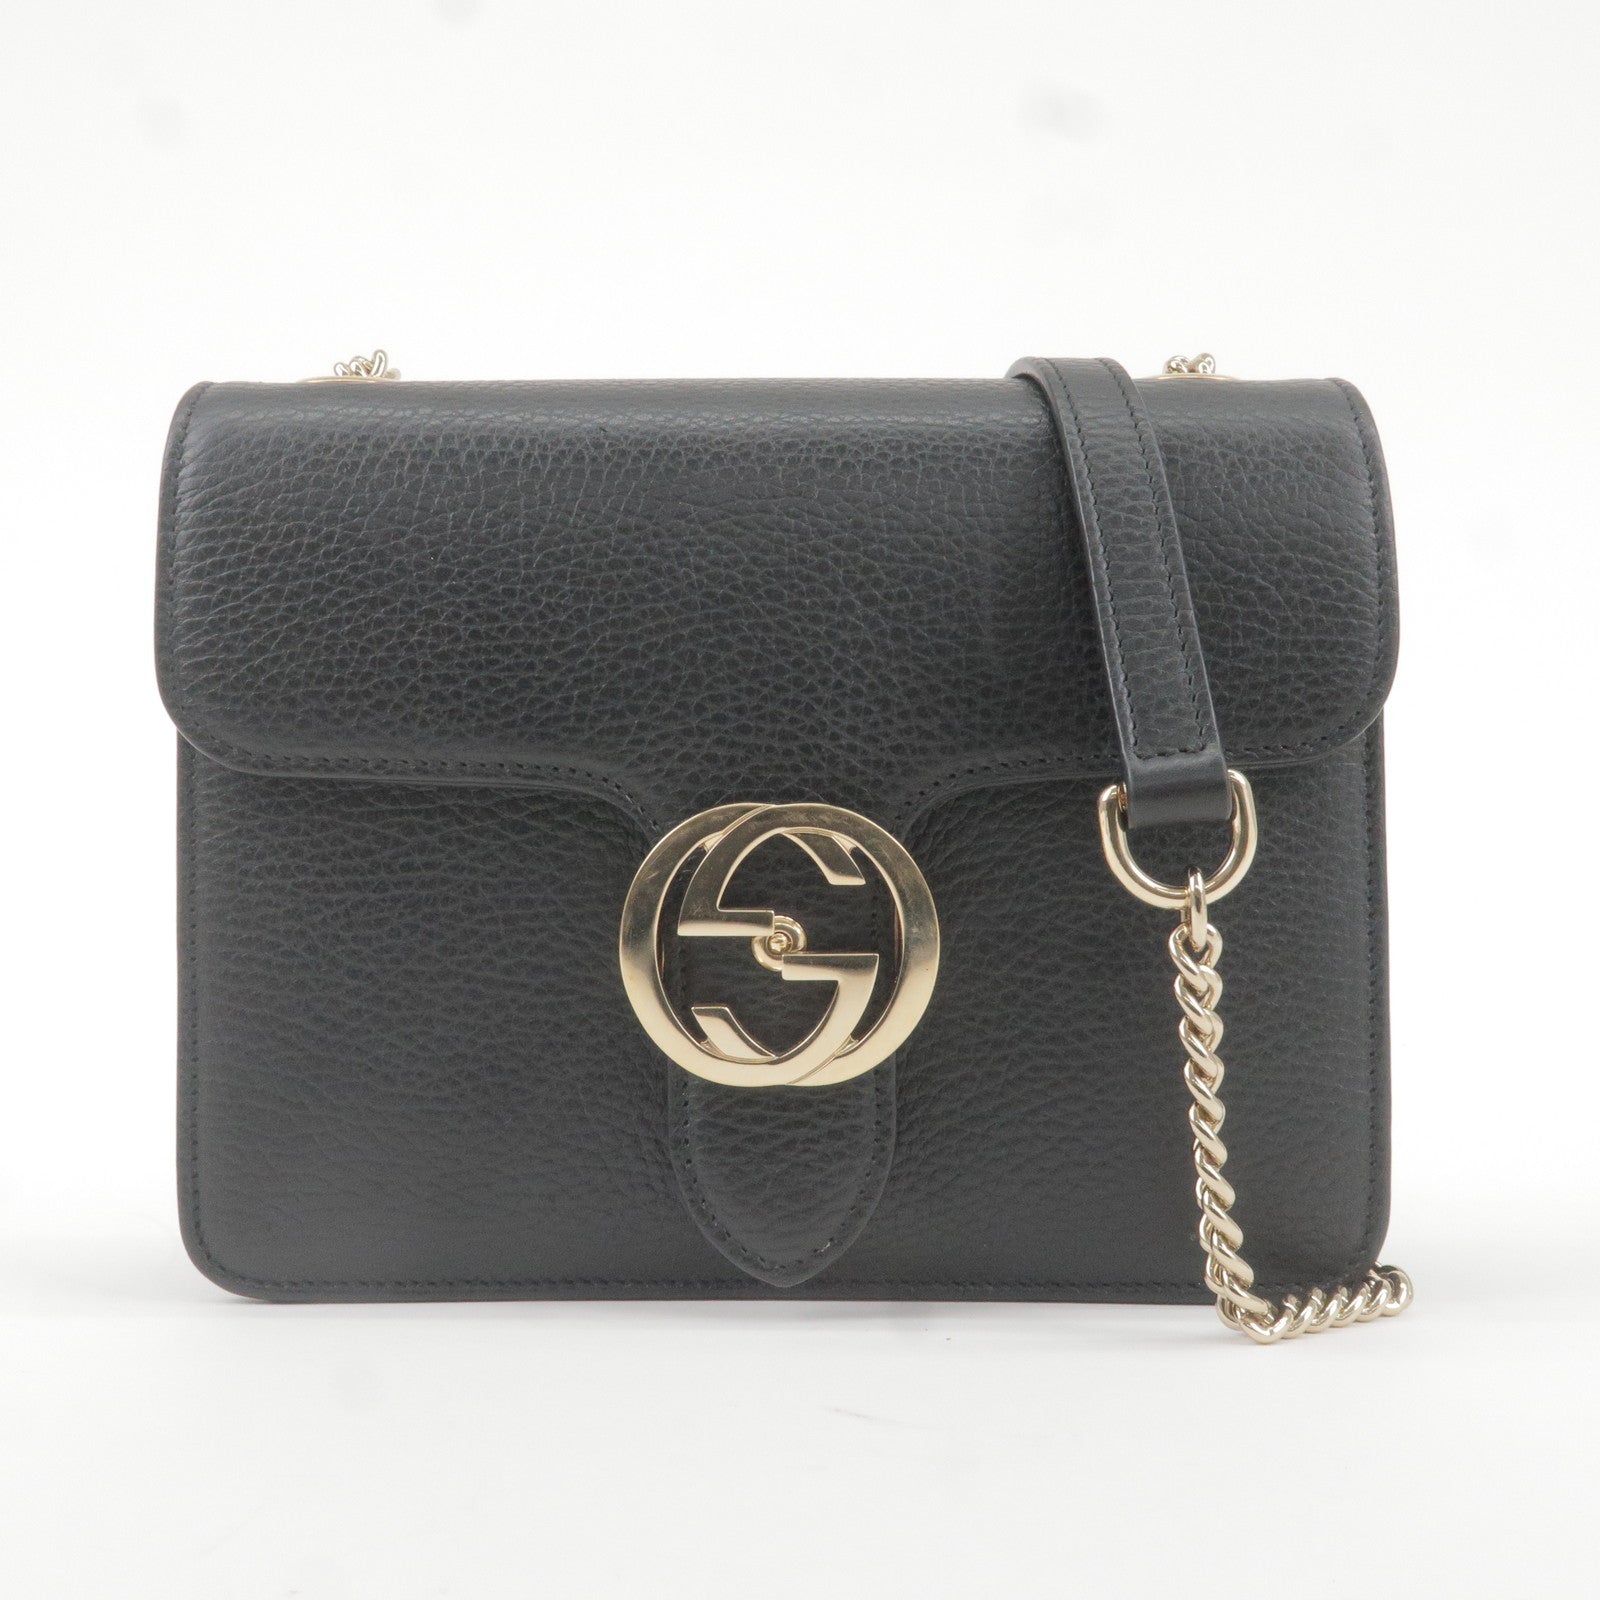 Gucci Interlocking G leather tote bag - Black